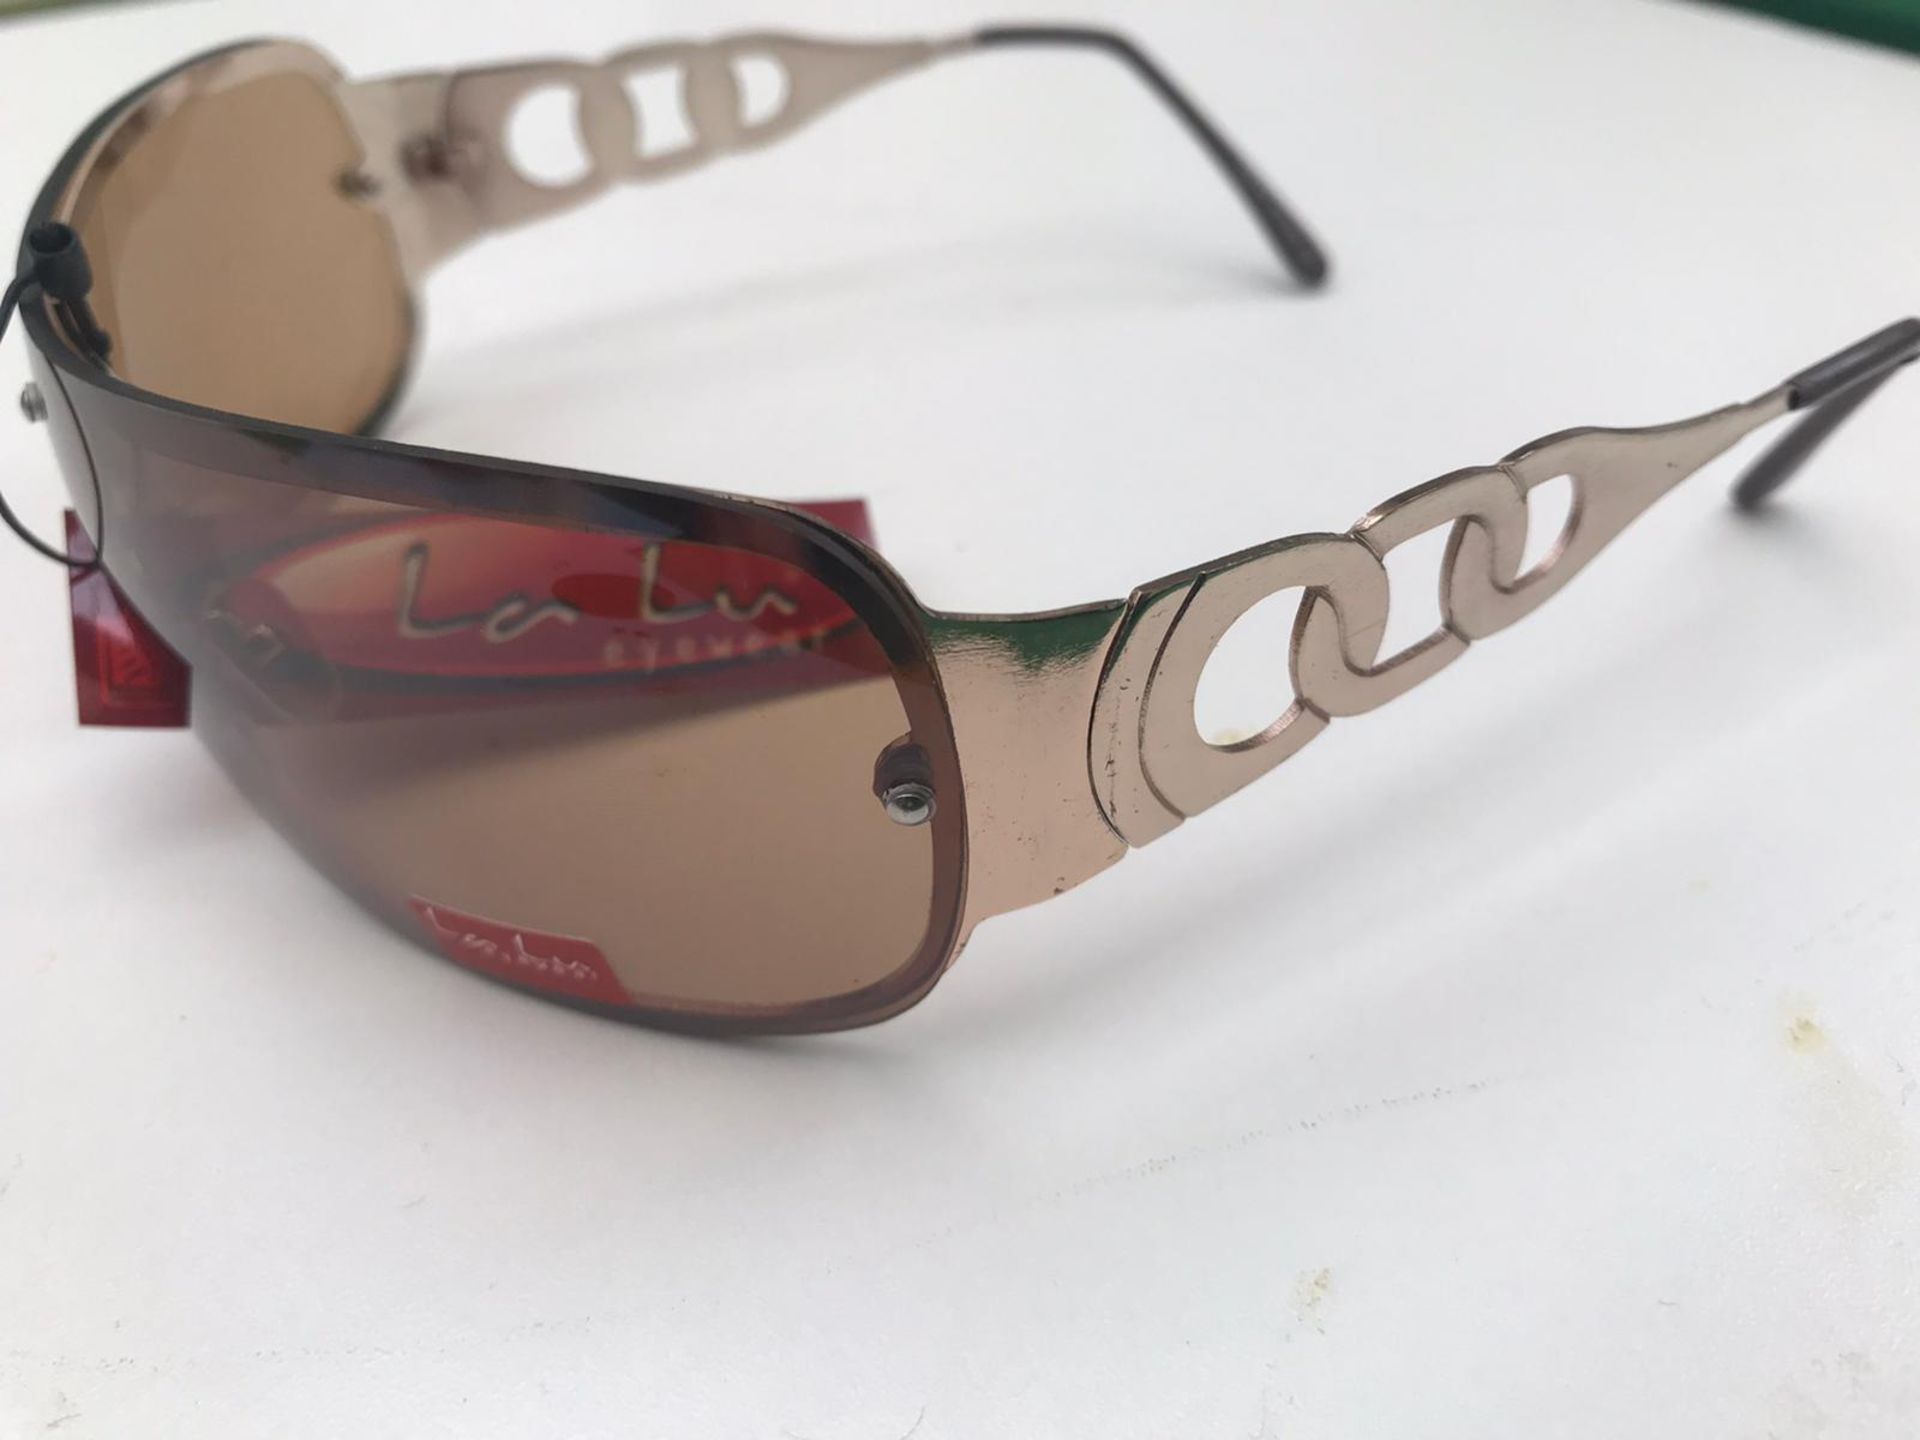 500 x La Lu Branded Sunglasses | Various Styles - Image 25 of 64